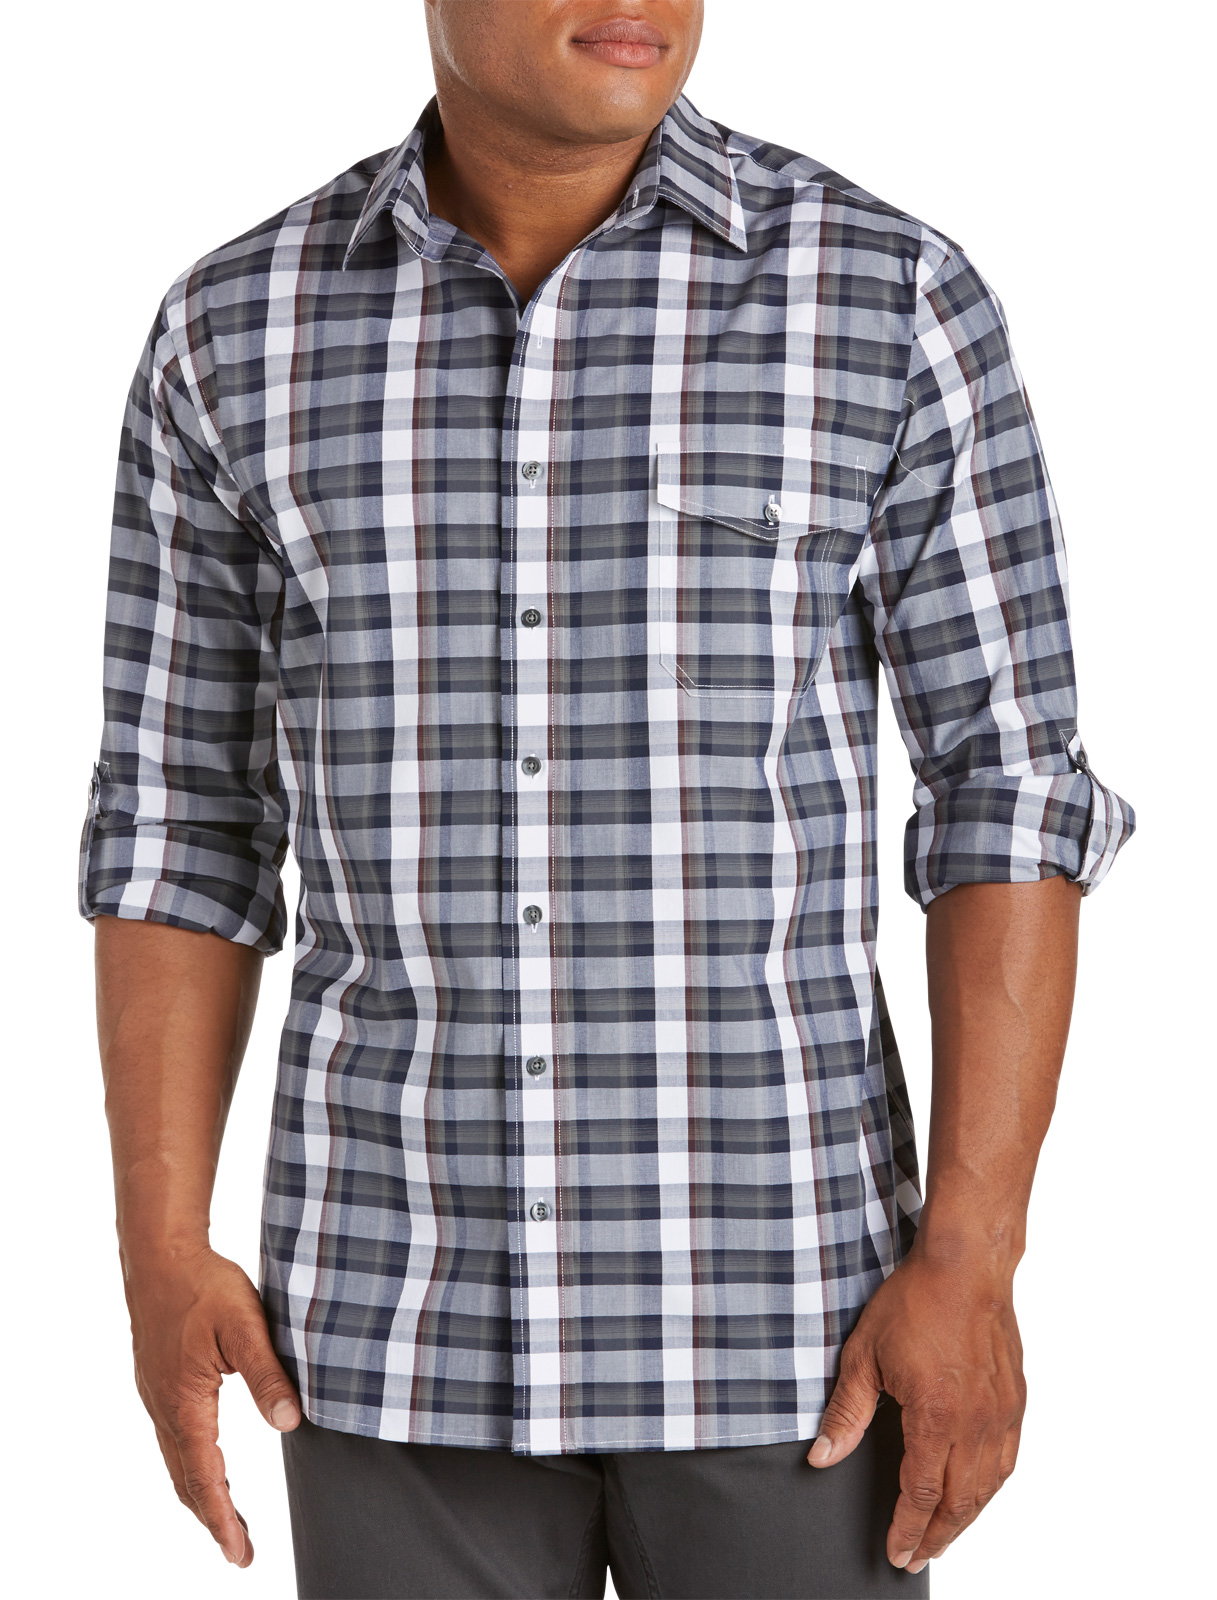 Synrgy Men's Big and Tall Medium Plaid Roll-Sleeve Sport Shirt